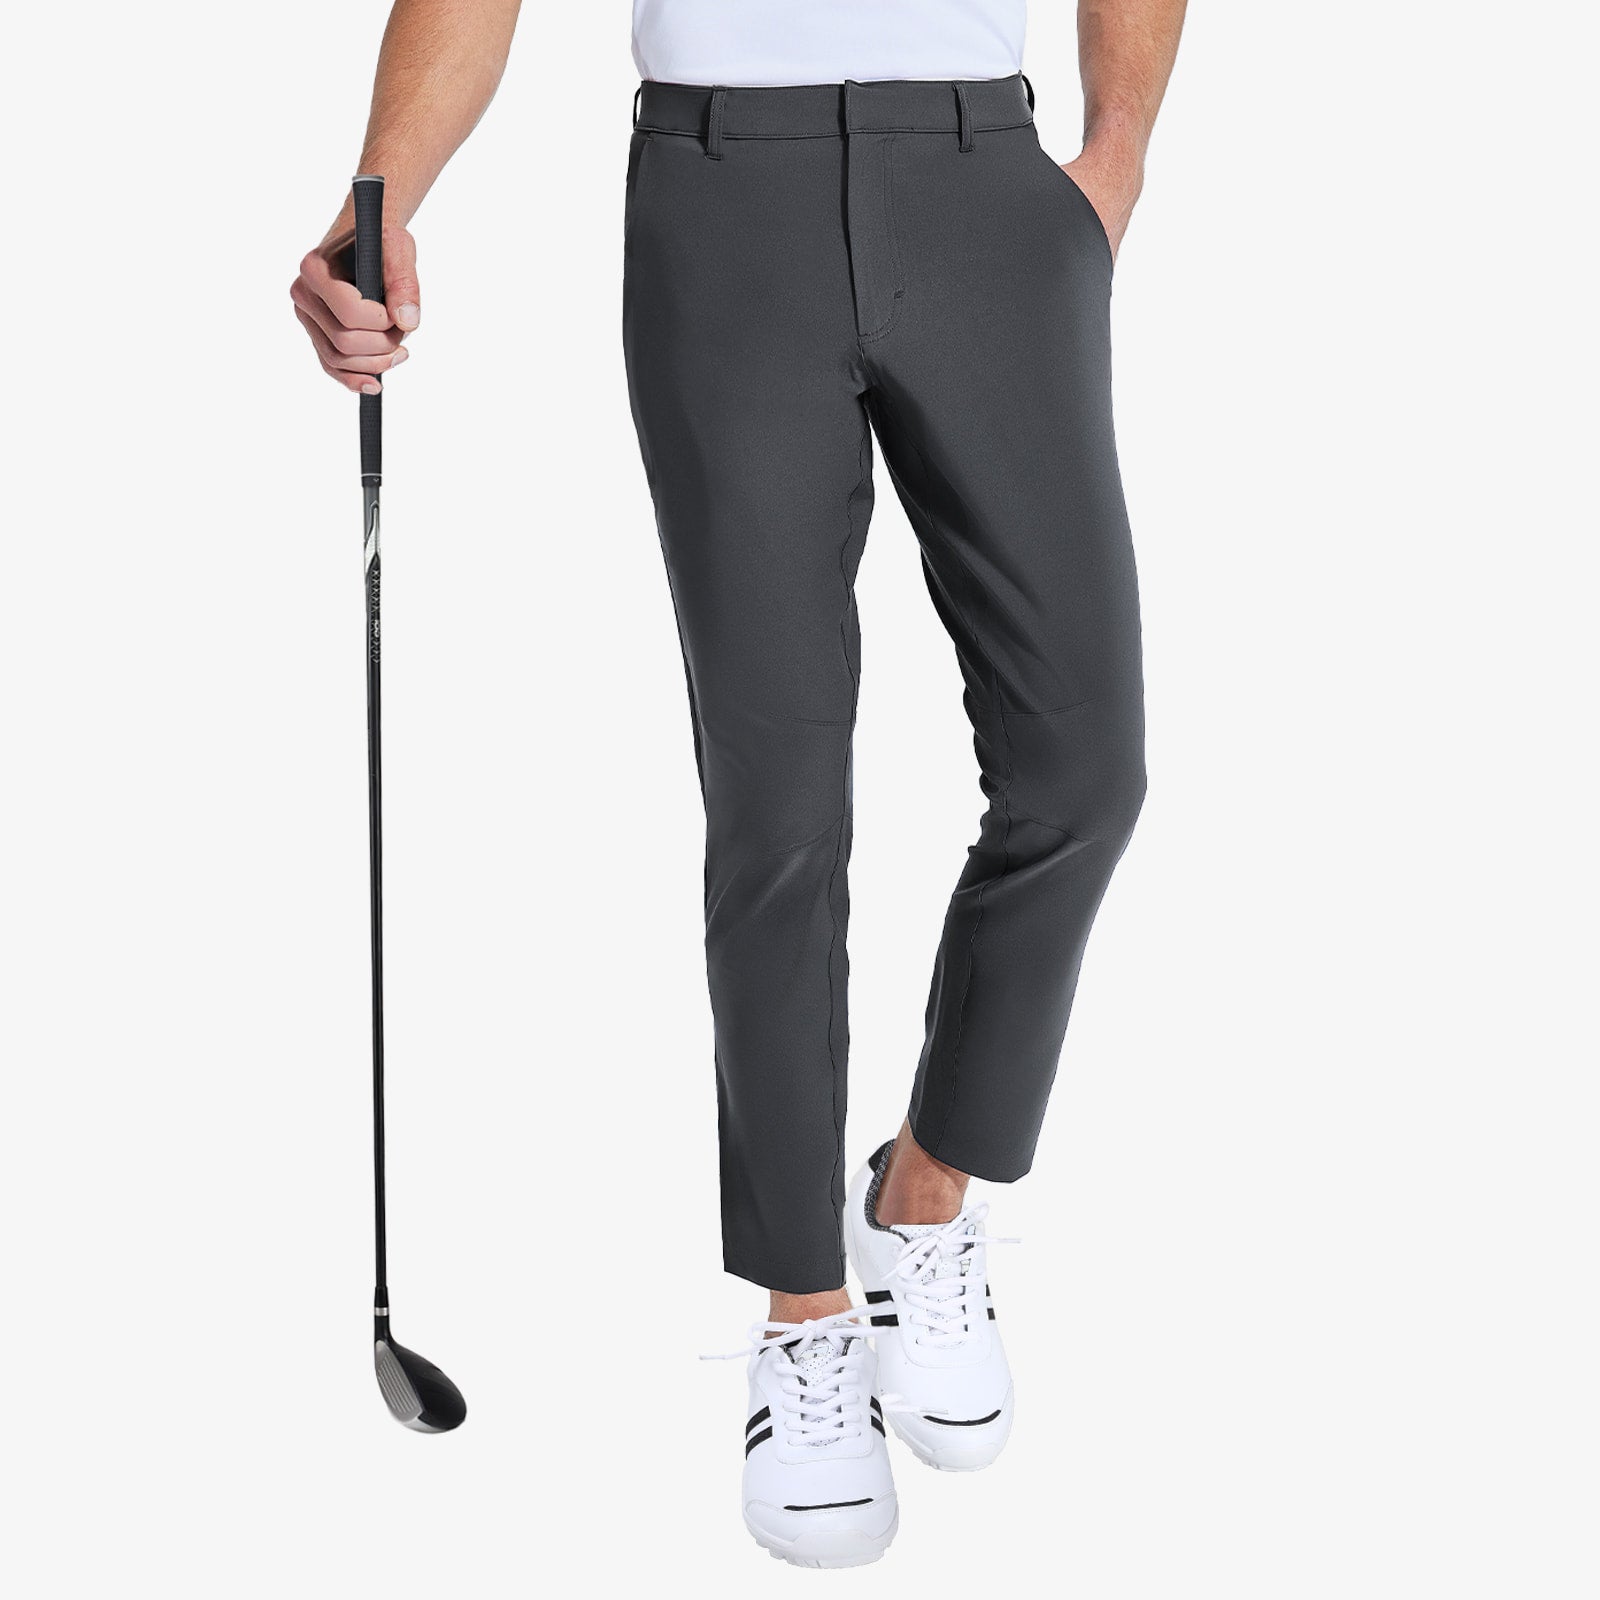 Men's Stretch Golf Pants Slim Fit Quick Dry Pants - Dark Grey / S